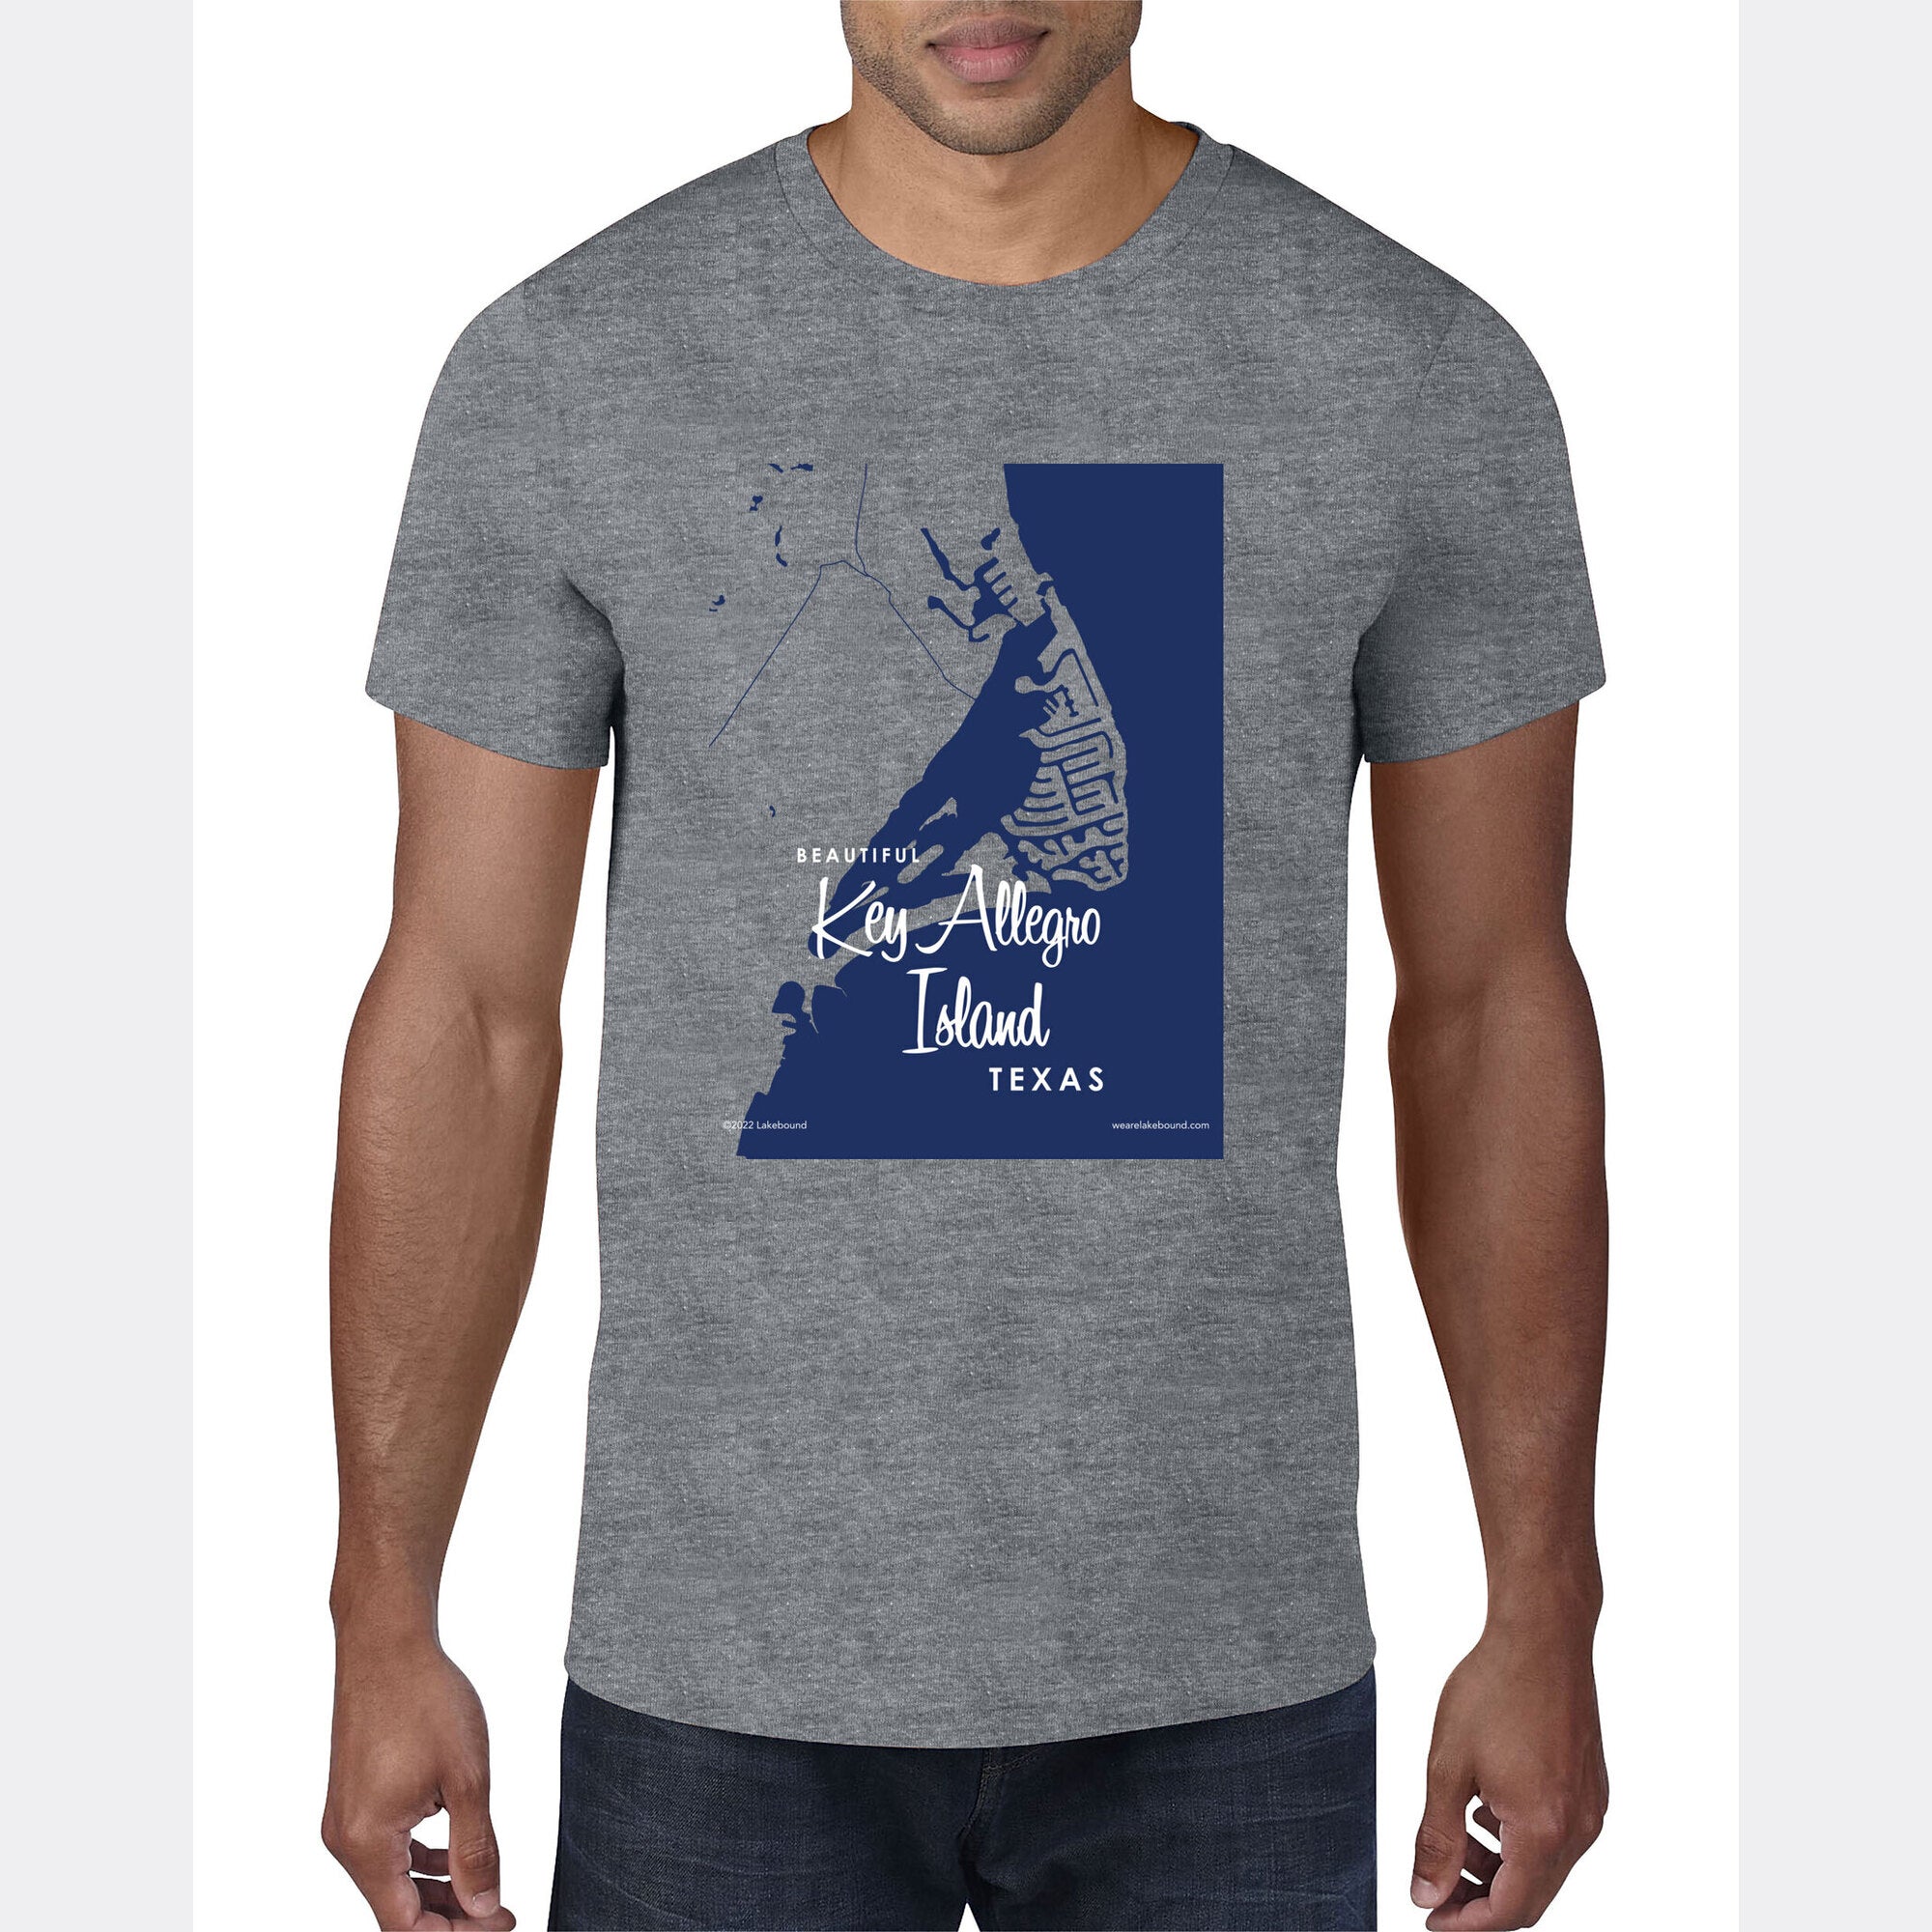 Key Allegro Island Texas, T-Shirt